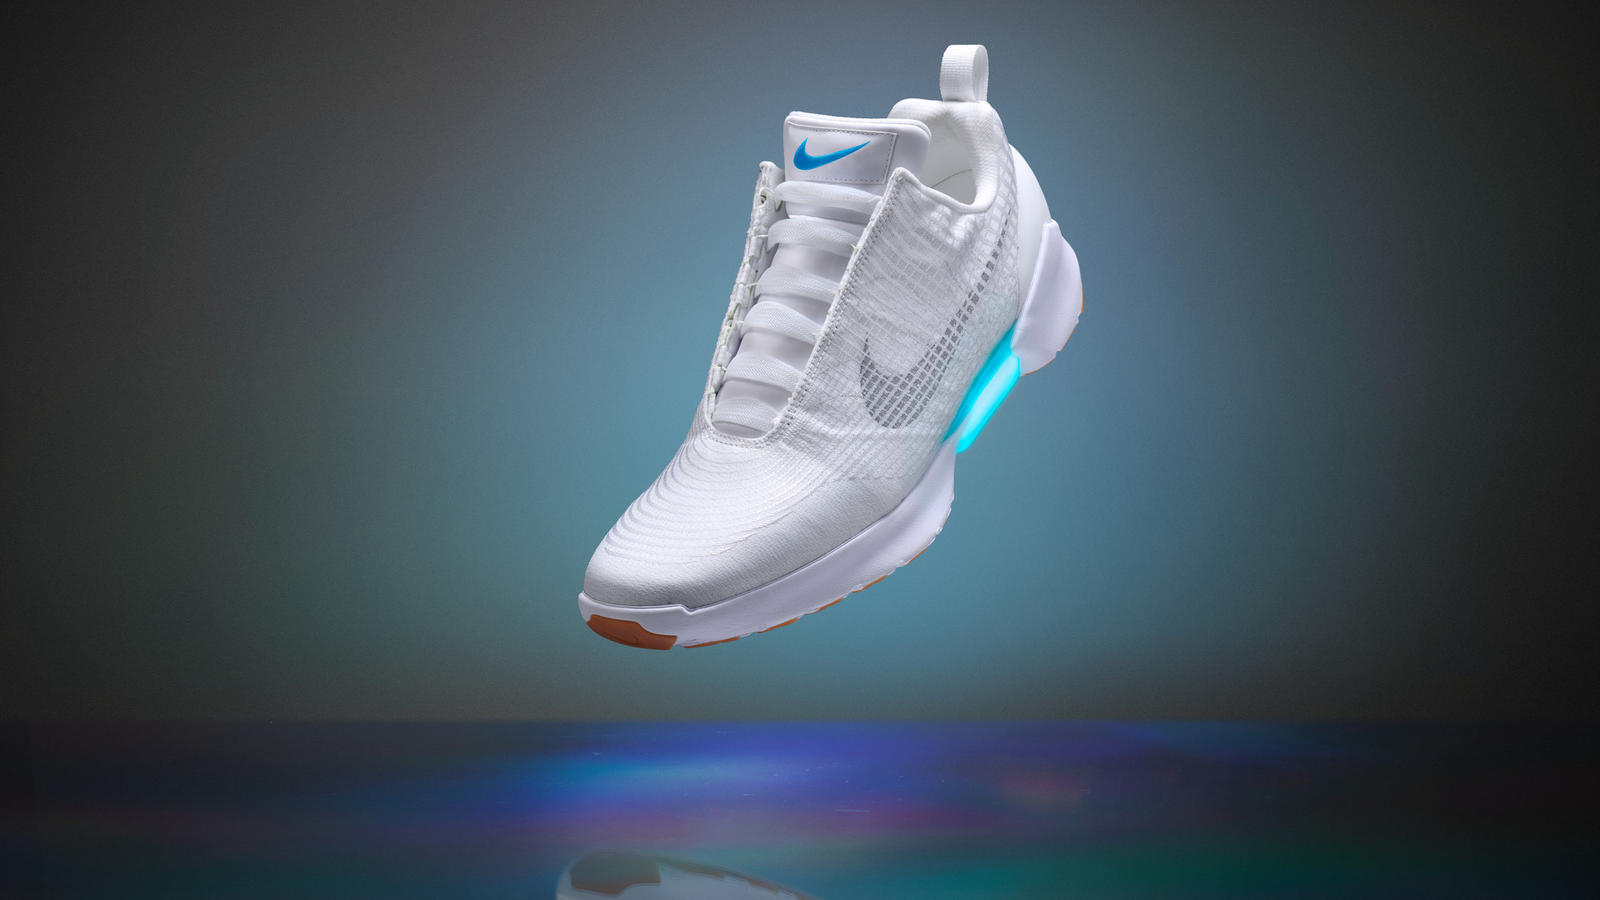 The Nike HyperAdapt 1.0 Eliminates Shoe Tying With Real Power Laces